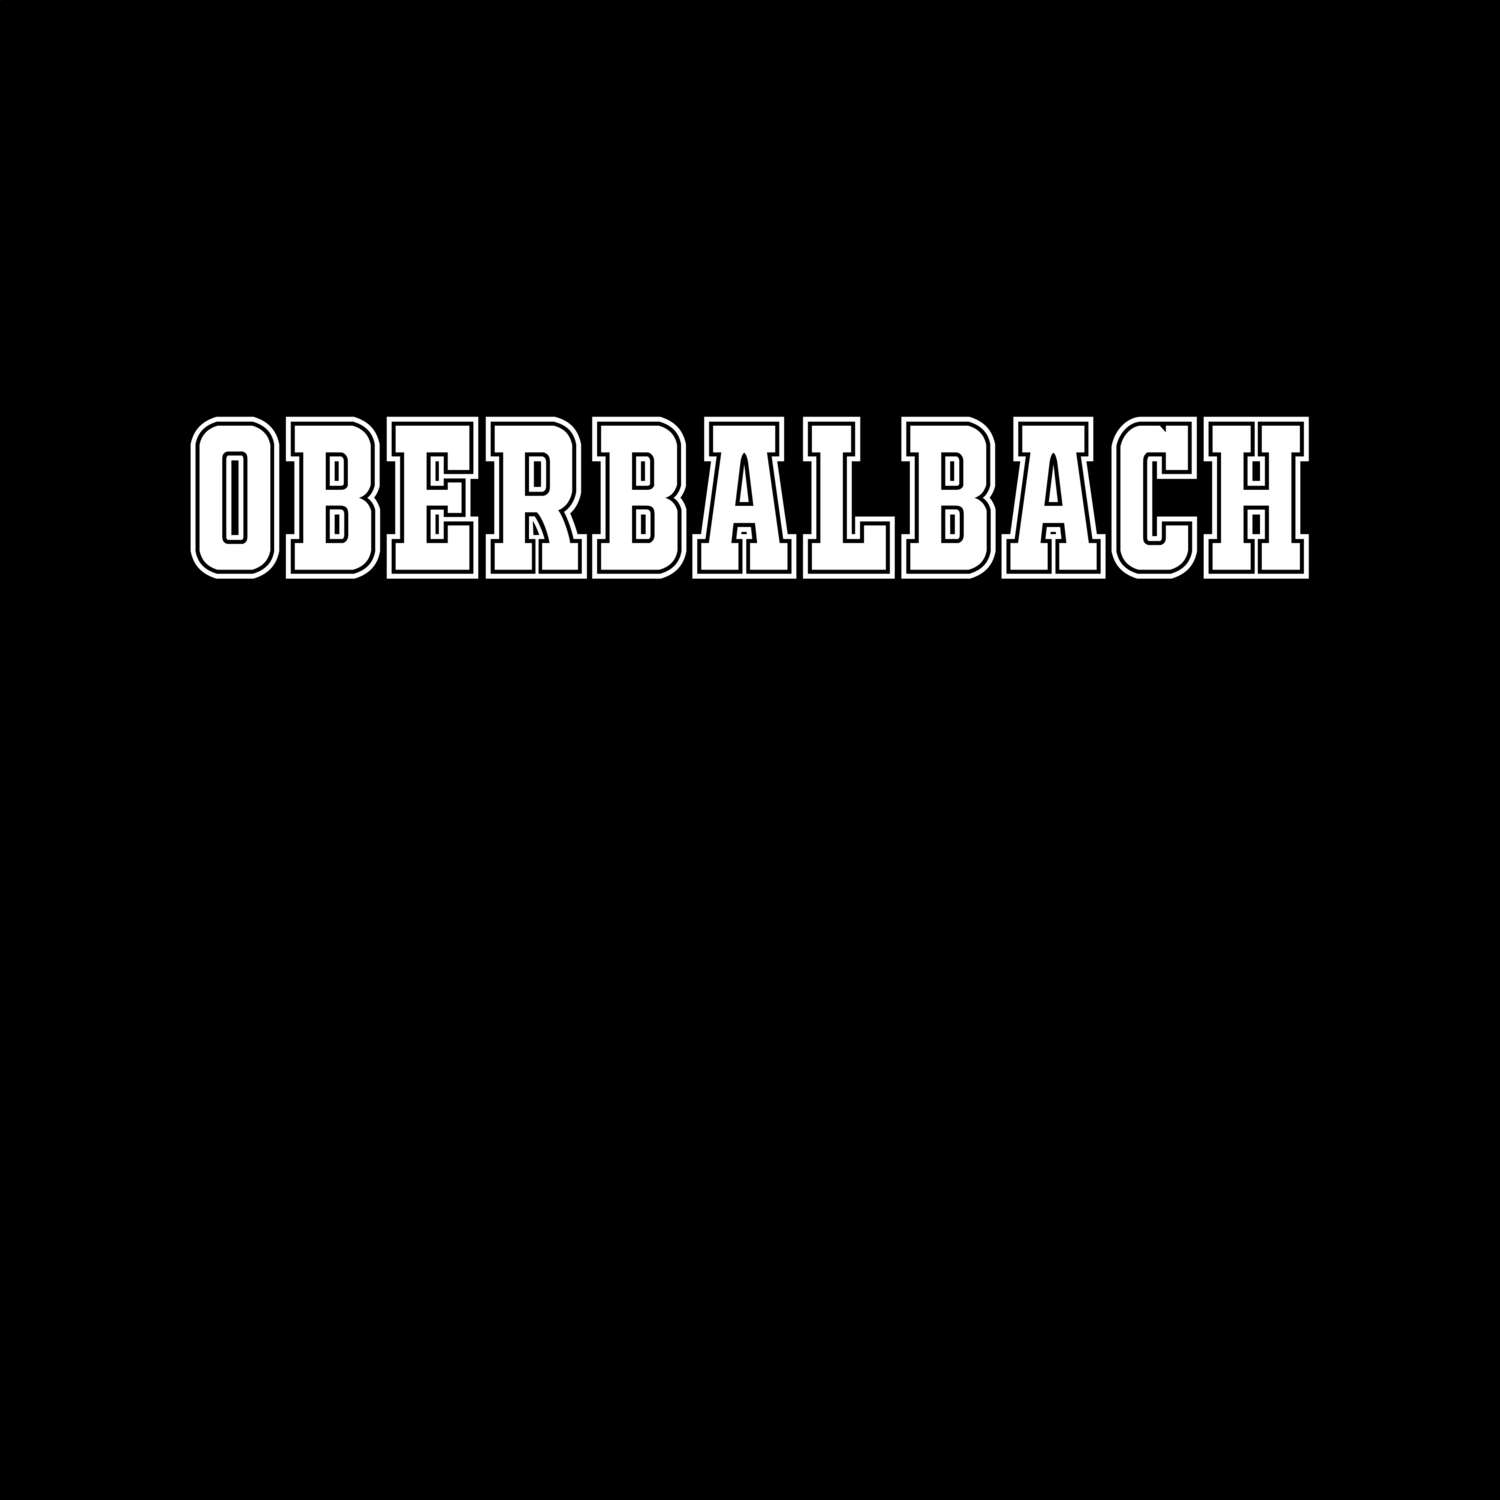 Oberbalbach T-Shirt »Classic«